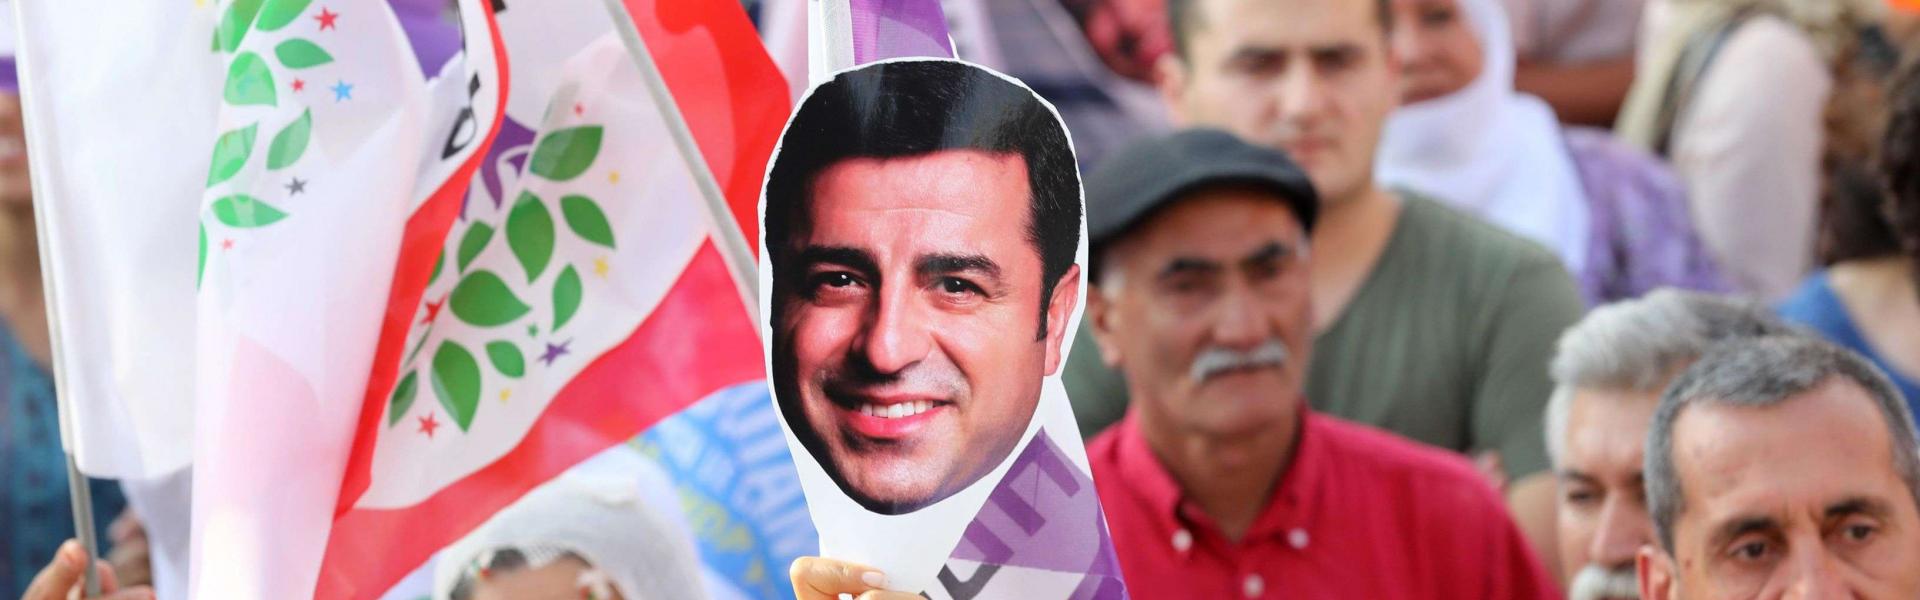 Jailed lawmaker Demirtaş says pro-Kurdish HDP played key role in AKP upset at polls 4